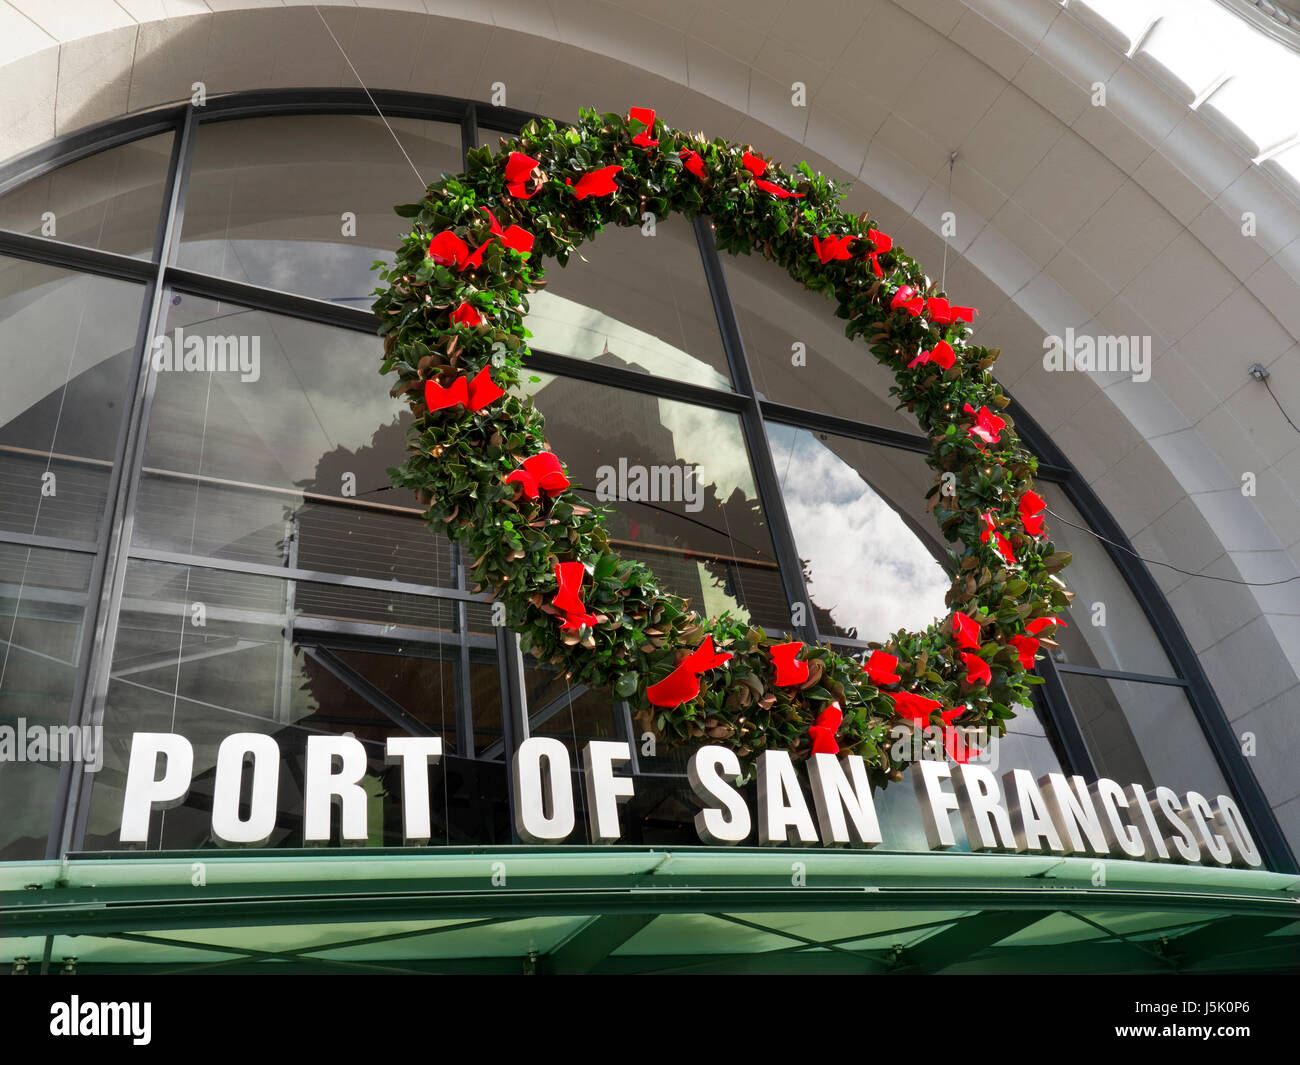 Frasi Natale San Francisco.Porto Di San Francisco Immagini E Fotos Stock Alamy